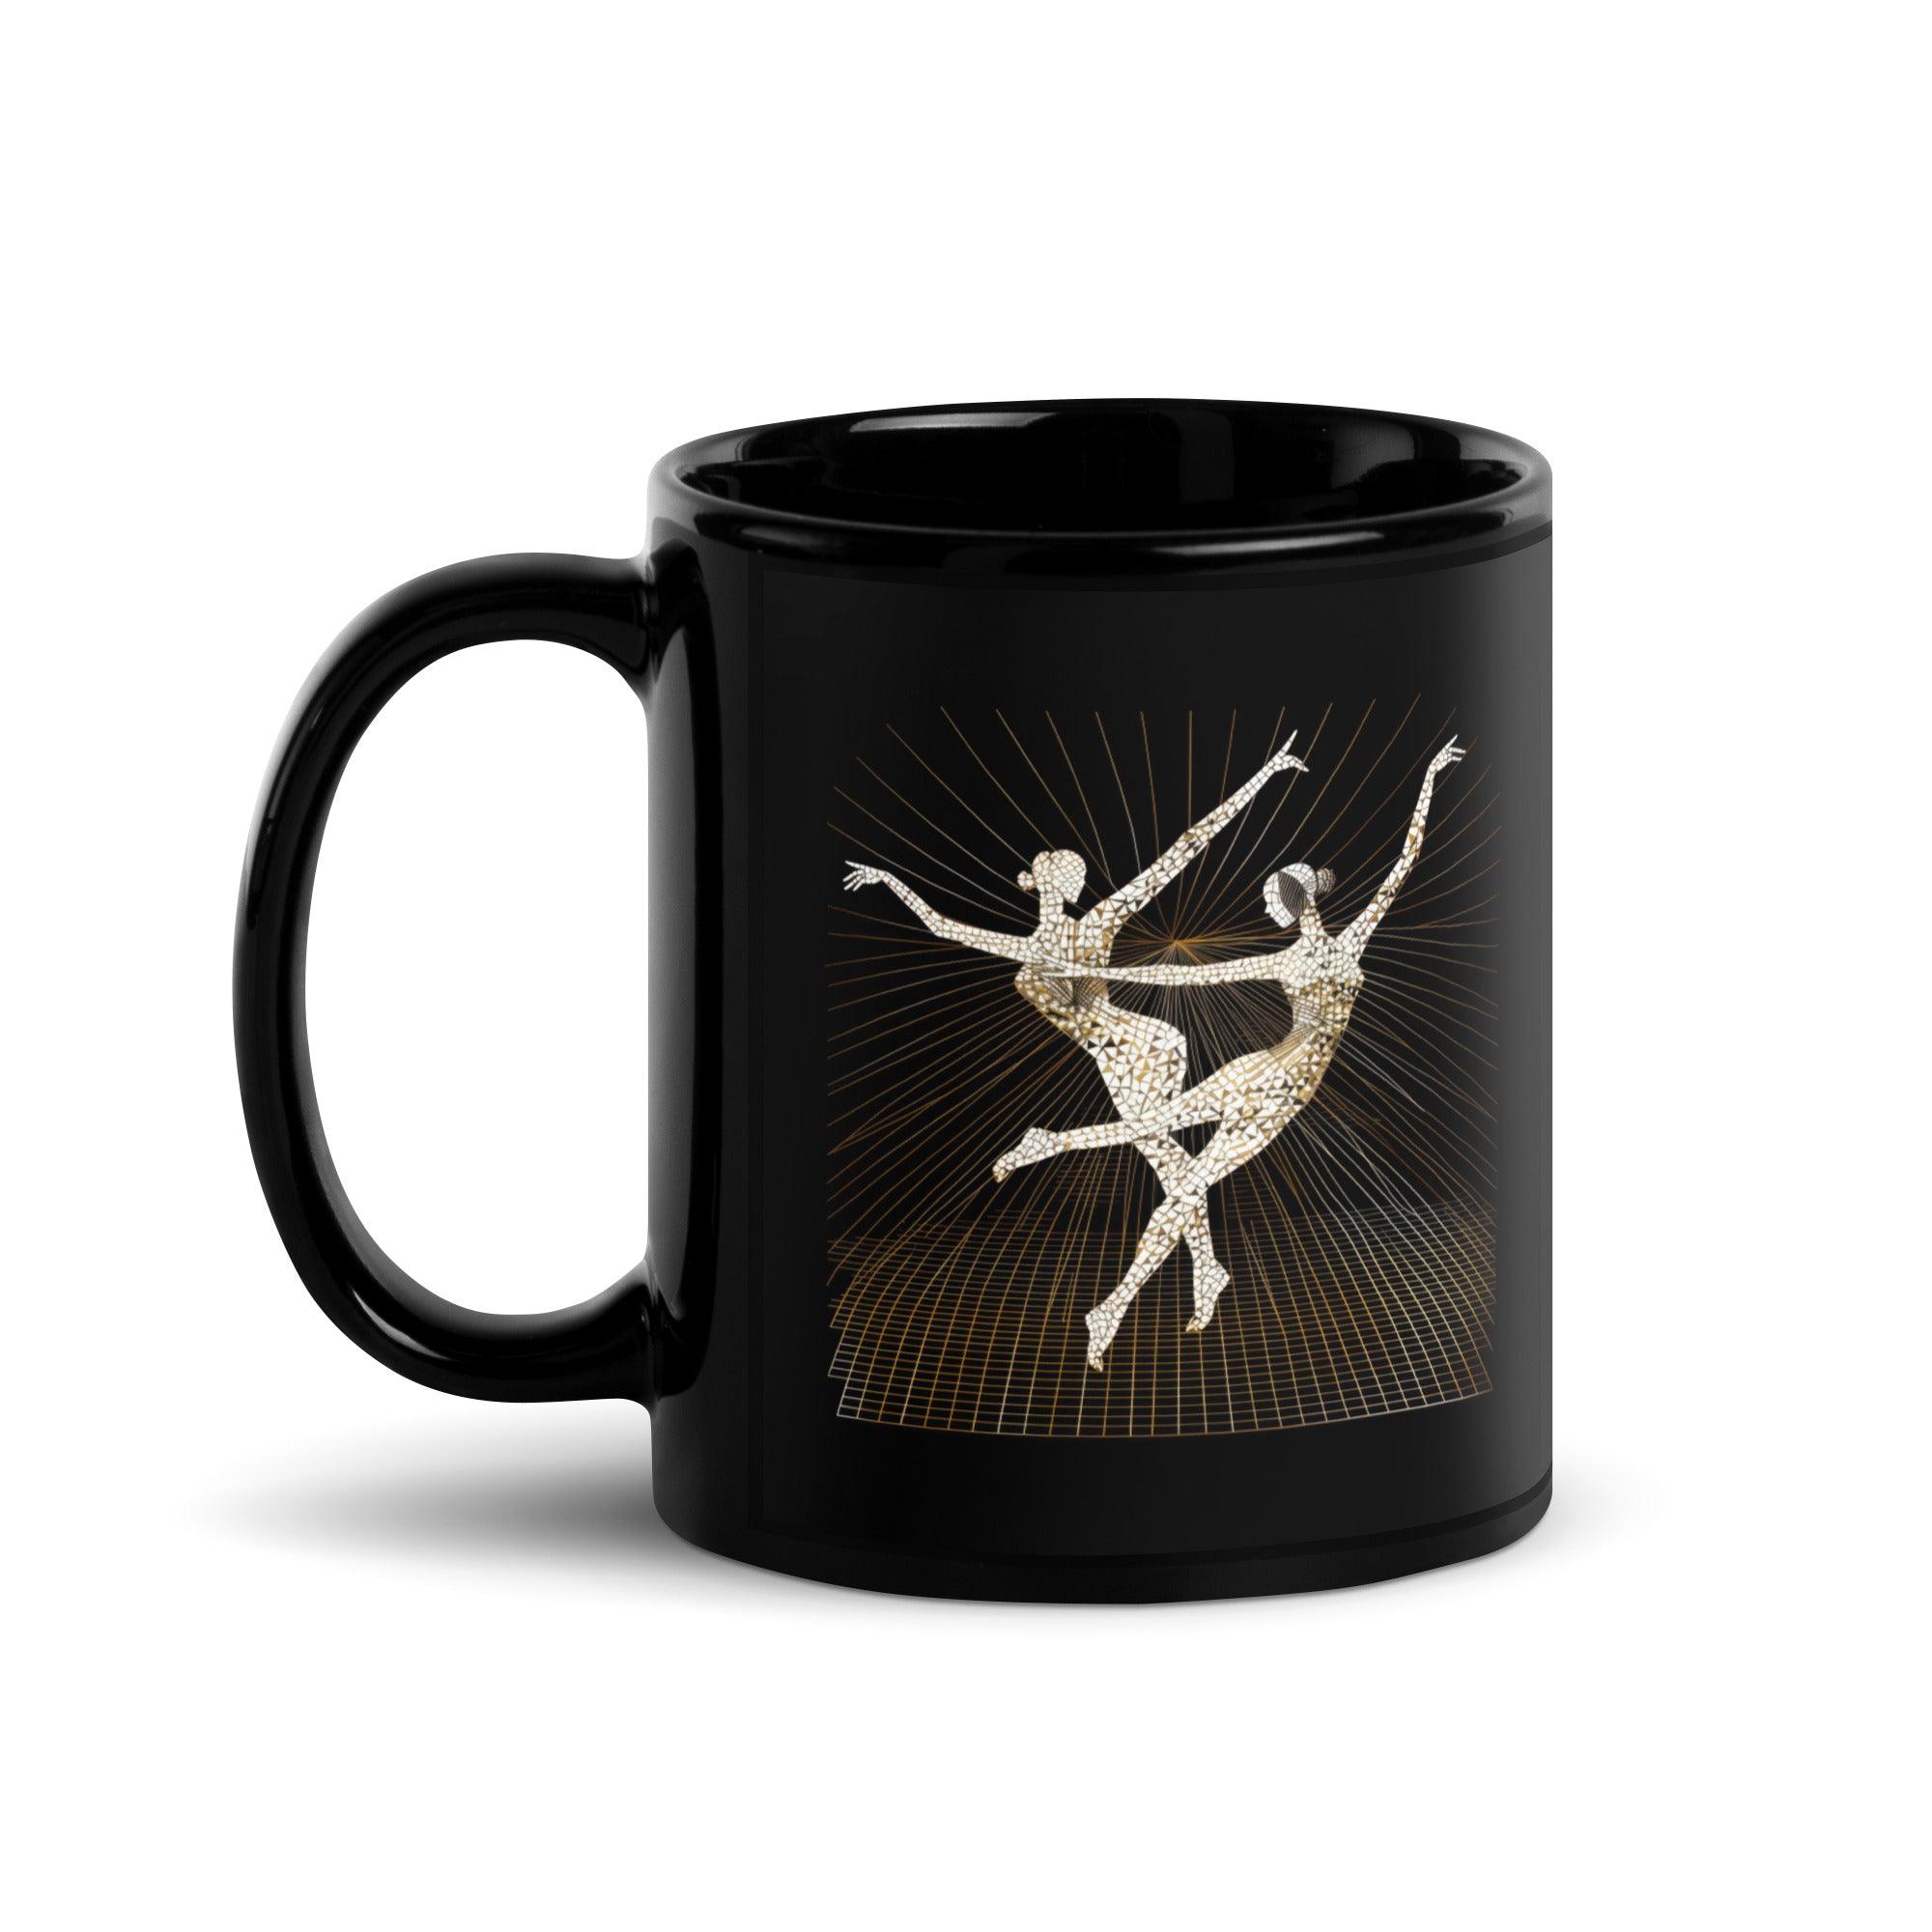 Stylish black coffee mug featuring elegant dance artwork